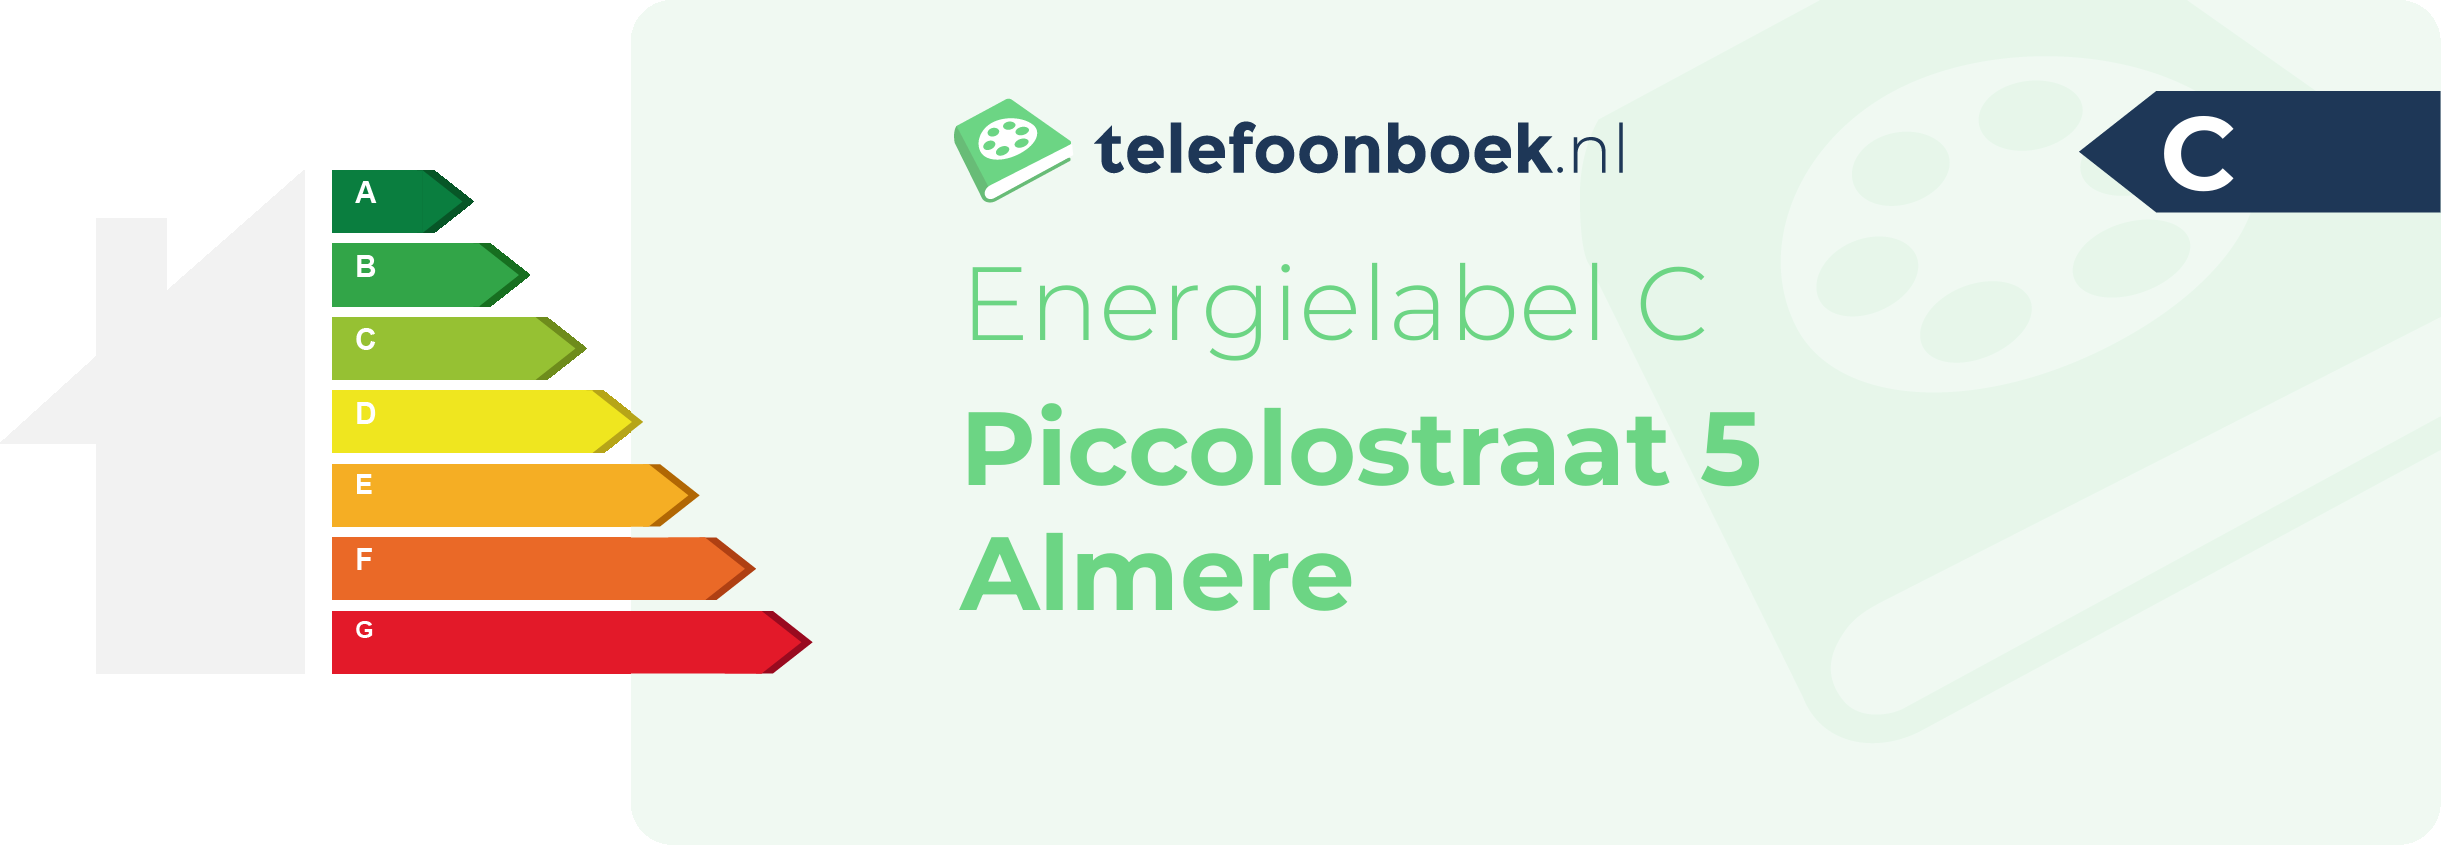 Energielabel Piccolostraat 5 Almere